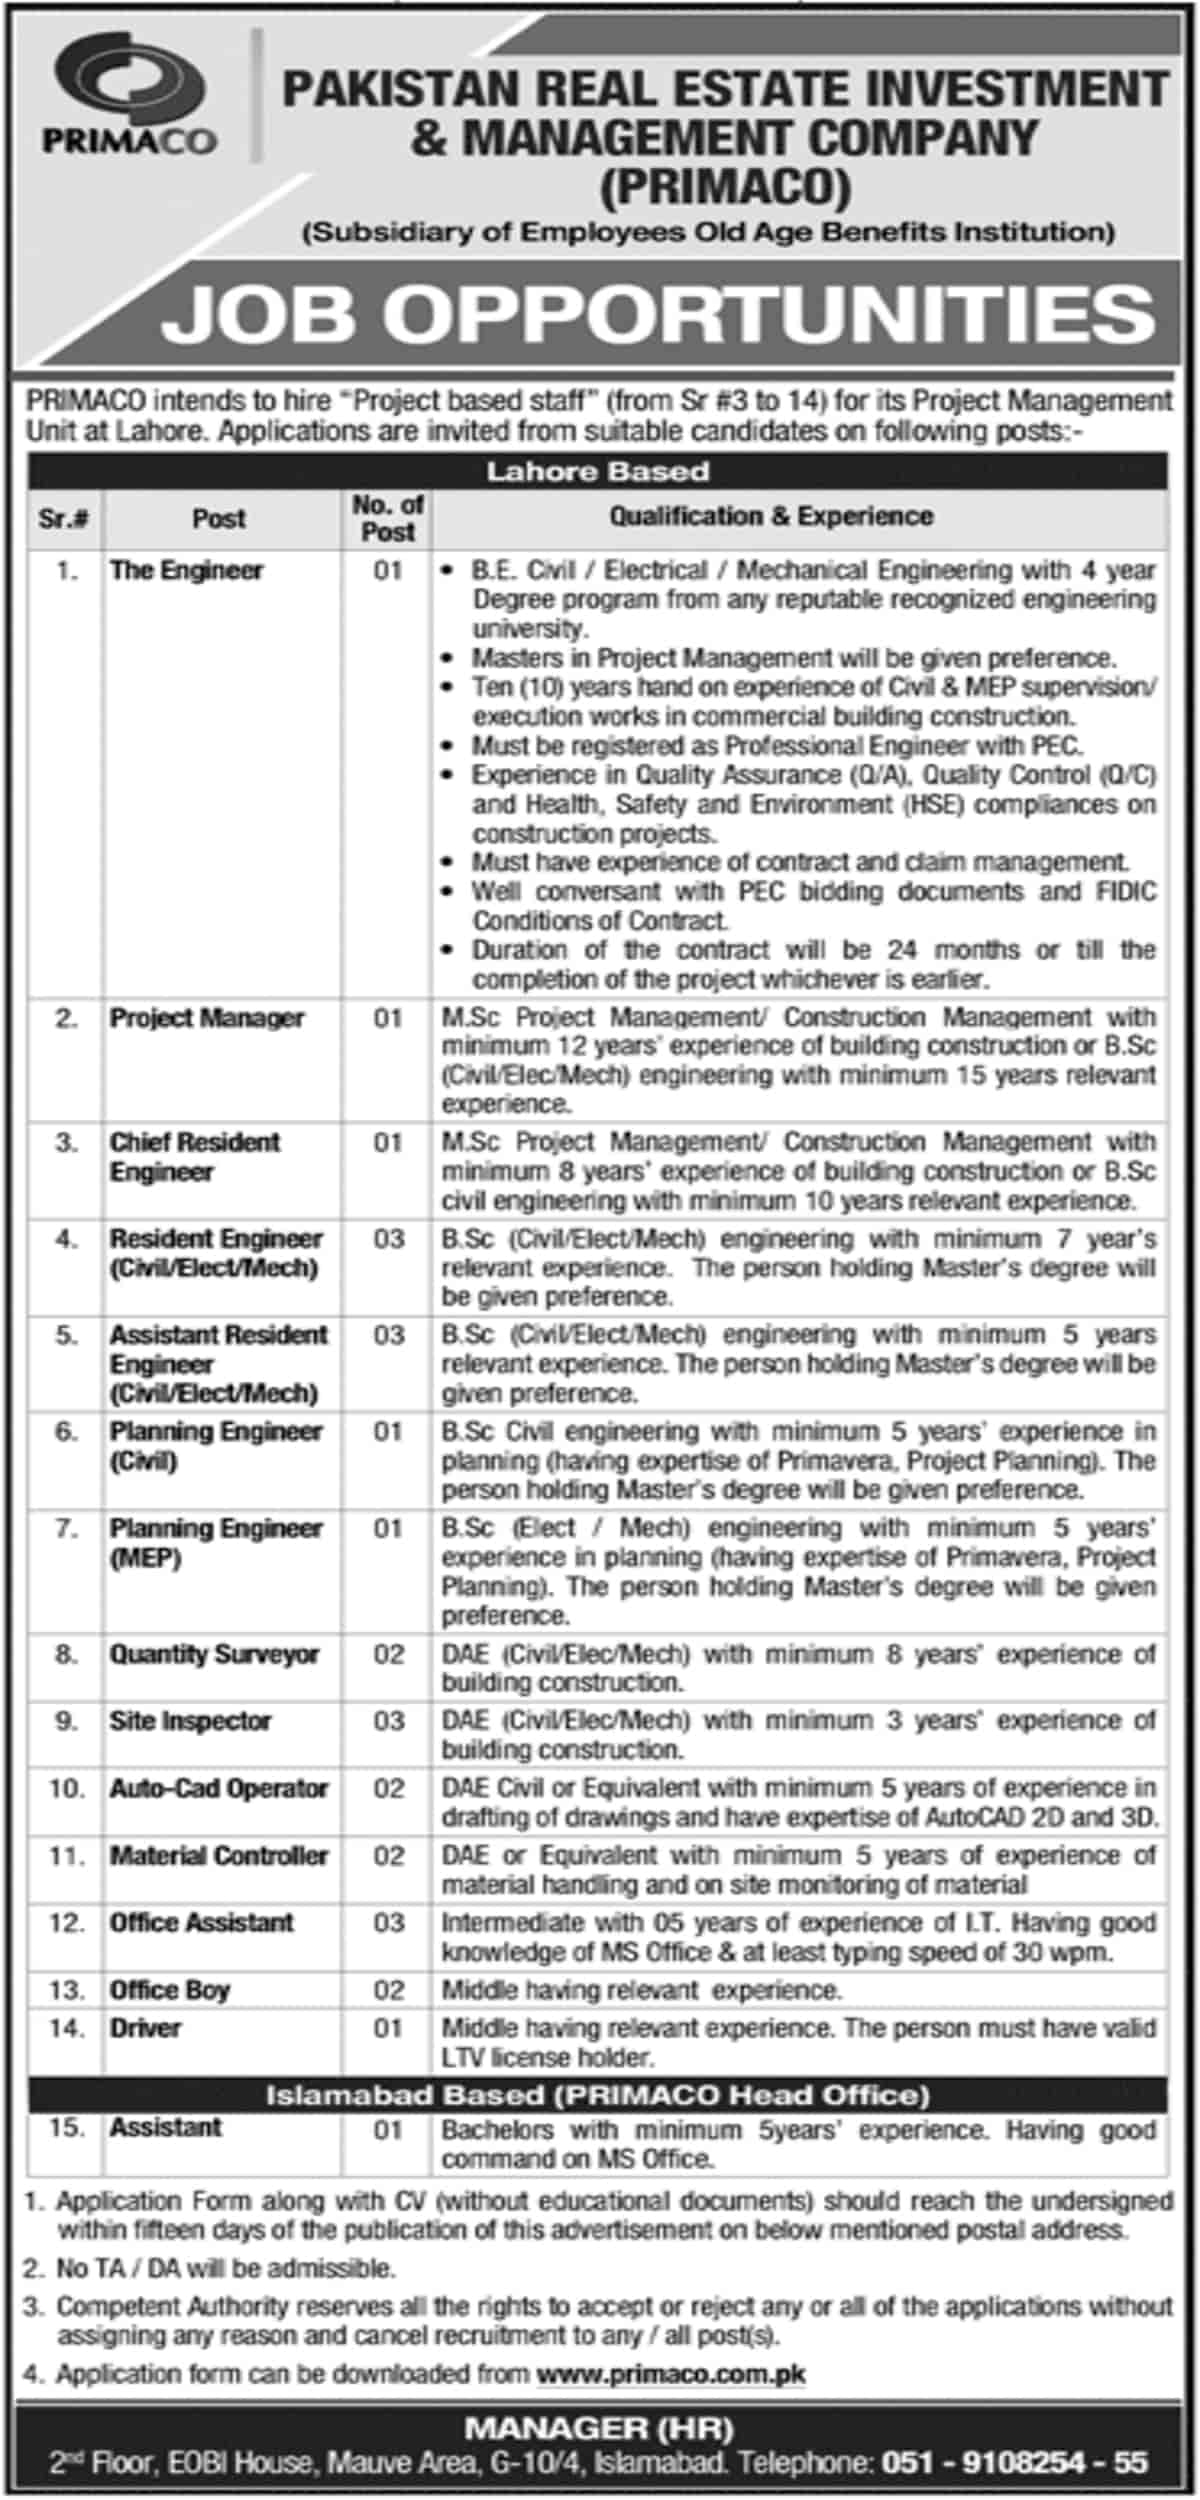 Pakistan Real Estate Company Primaco Jobs 2020 Application Form